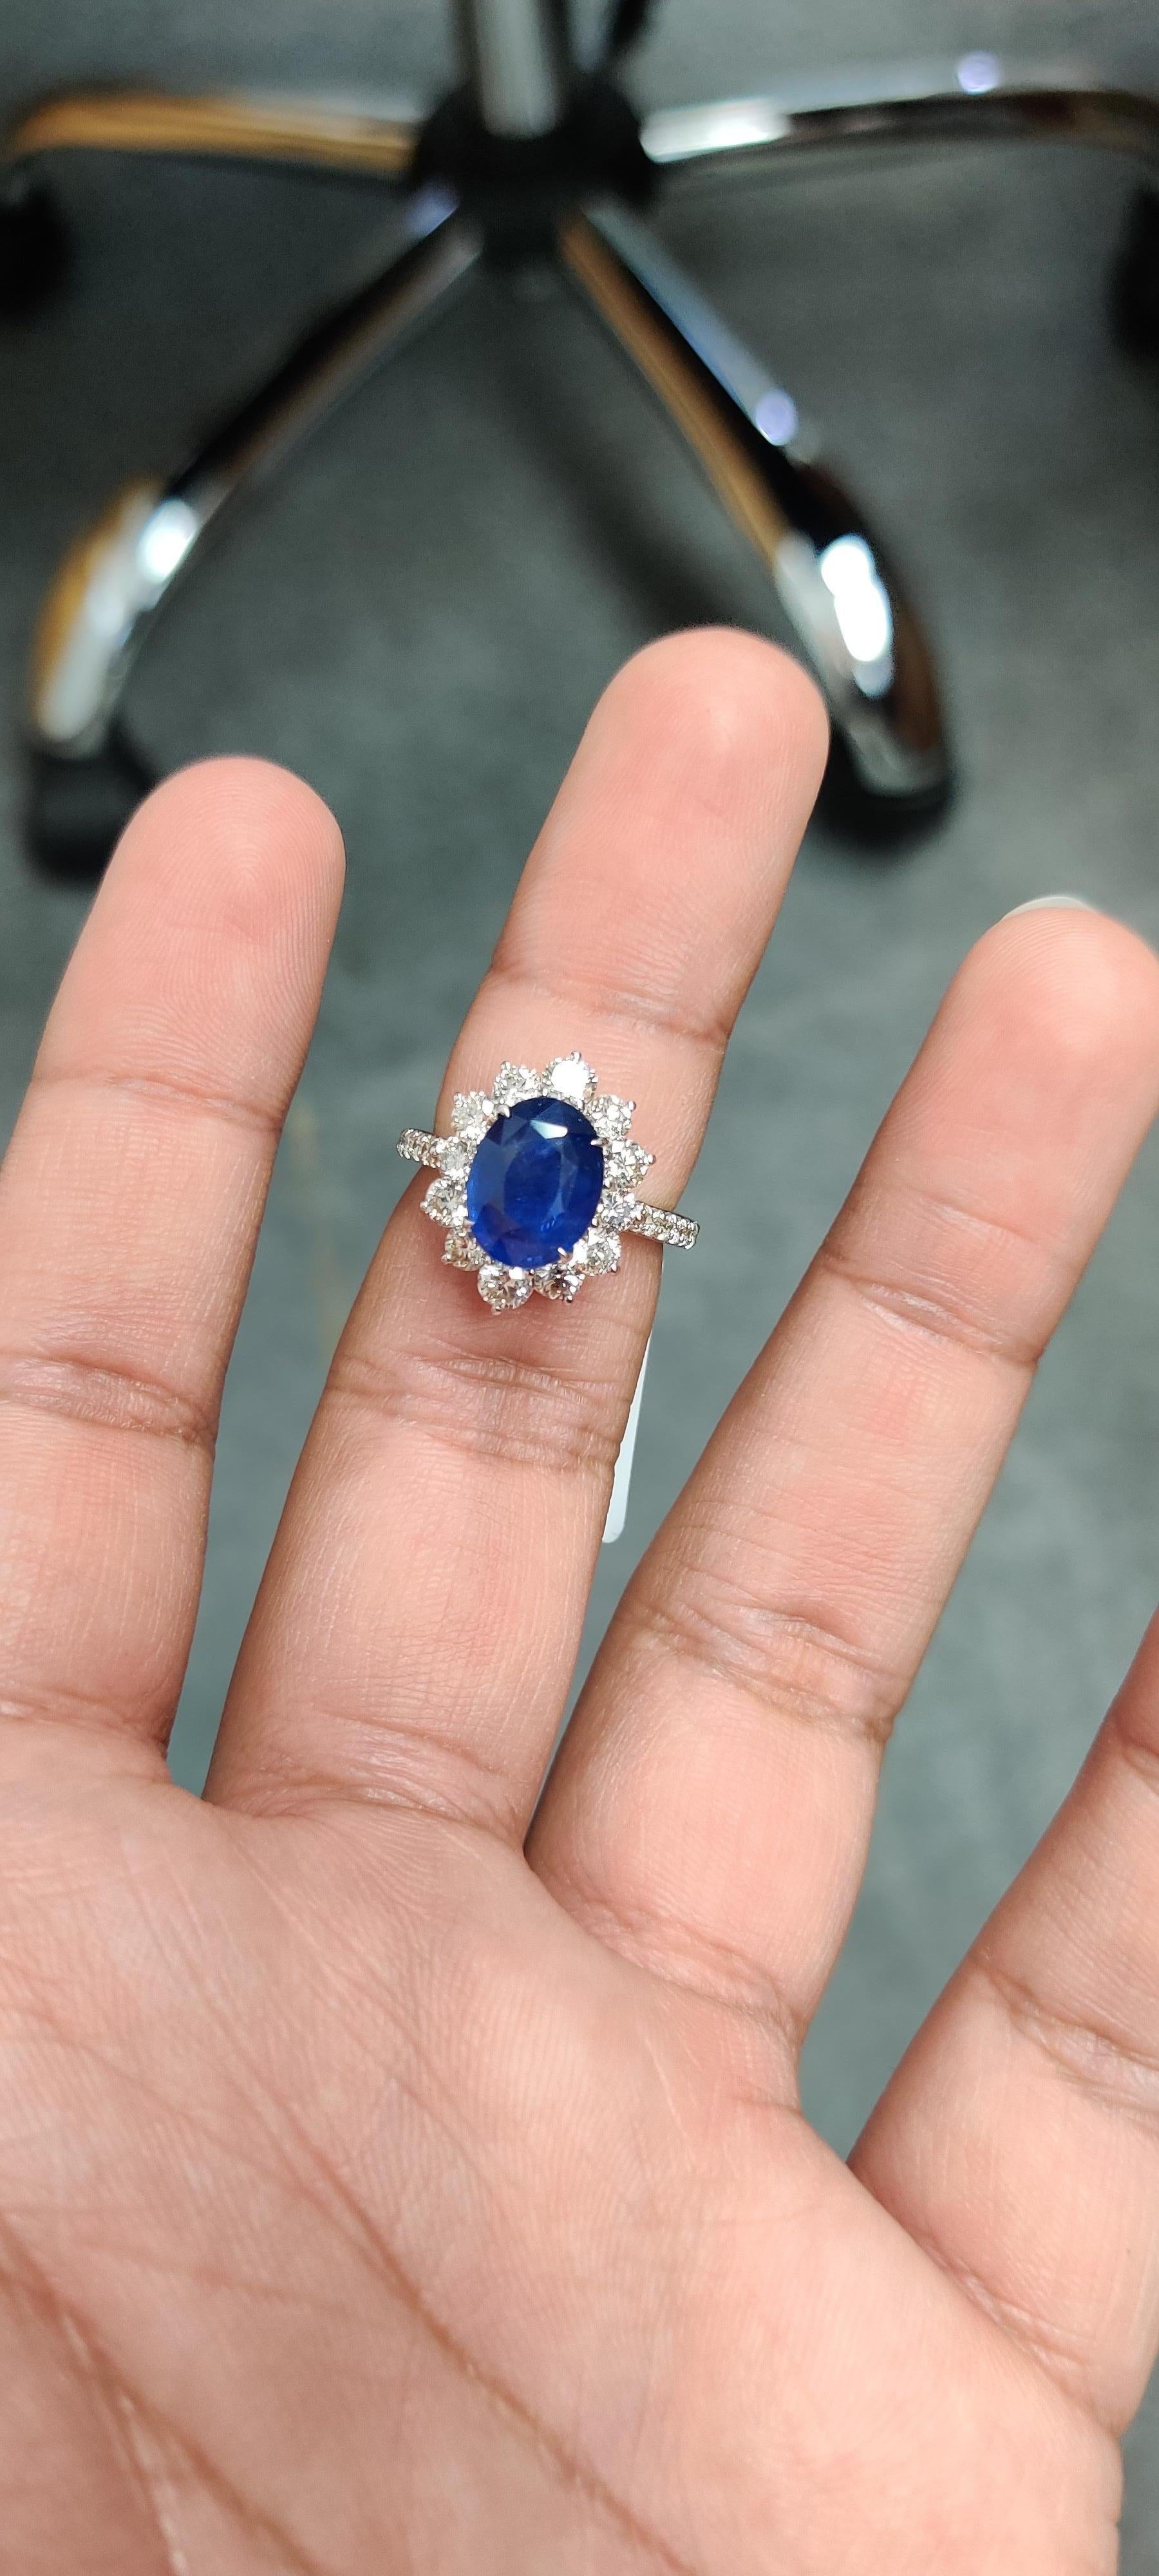 Art Deco 4.19 Carat Sapphire Diamond Cocktail Ring For Sale